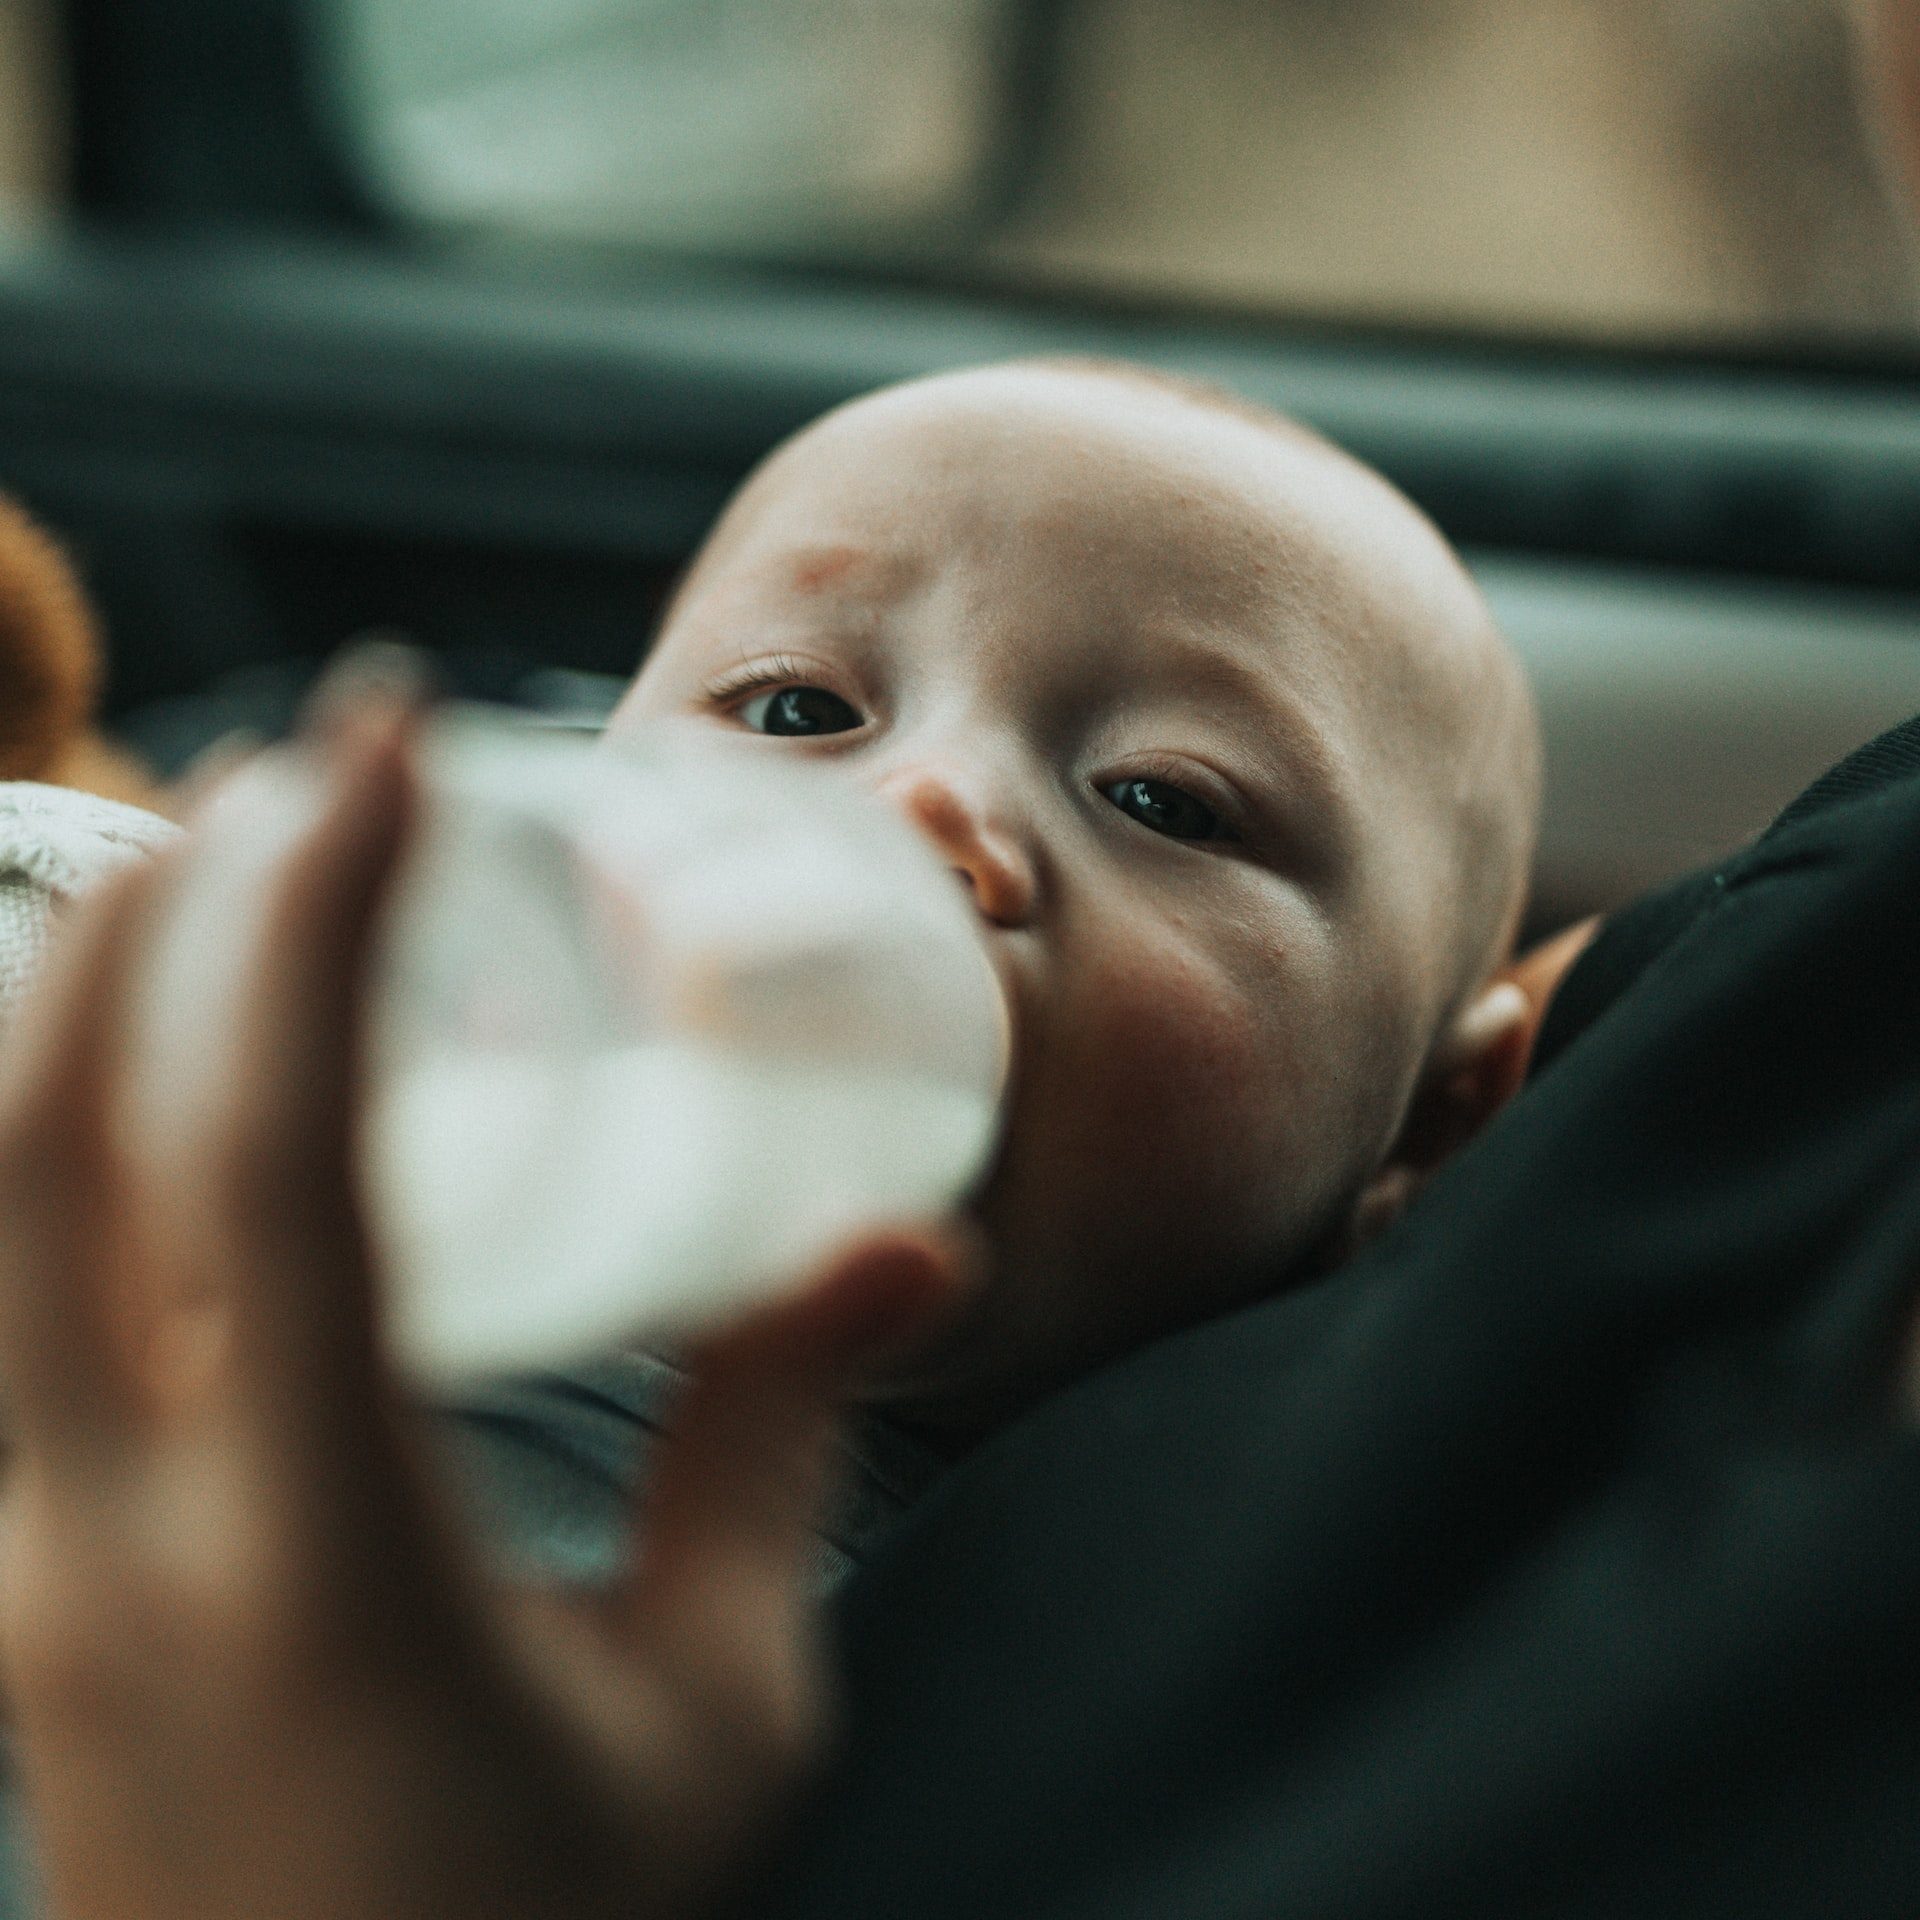 baby in blue shirt drinking milk from feeding bottle